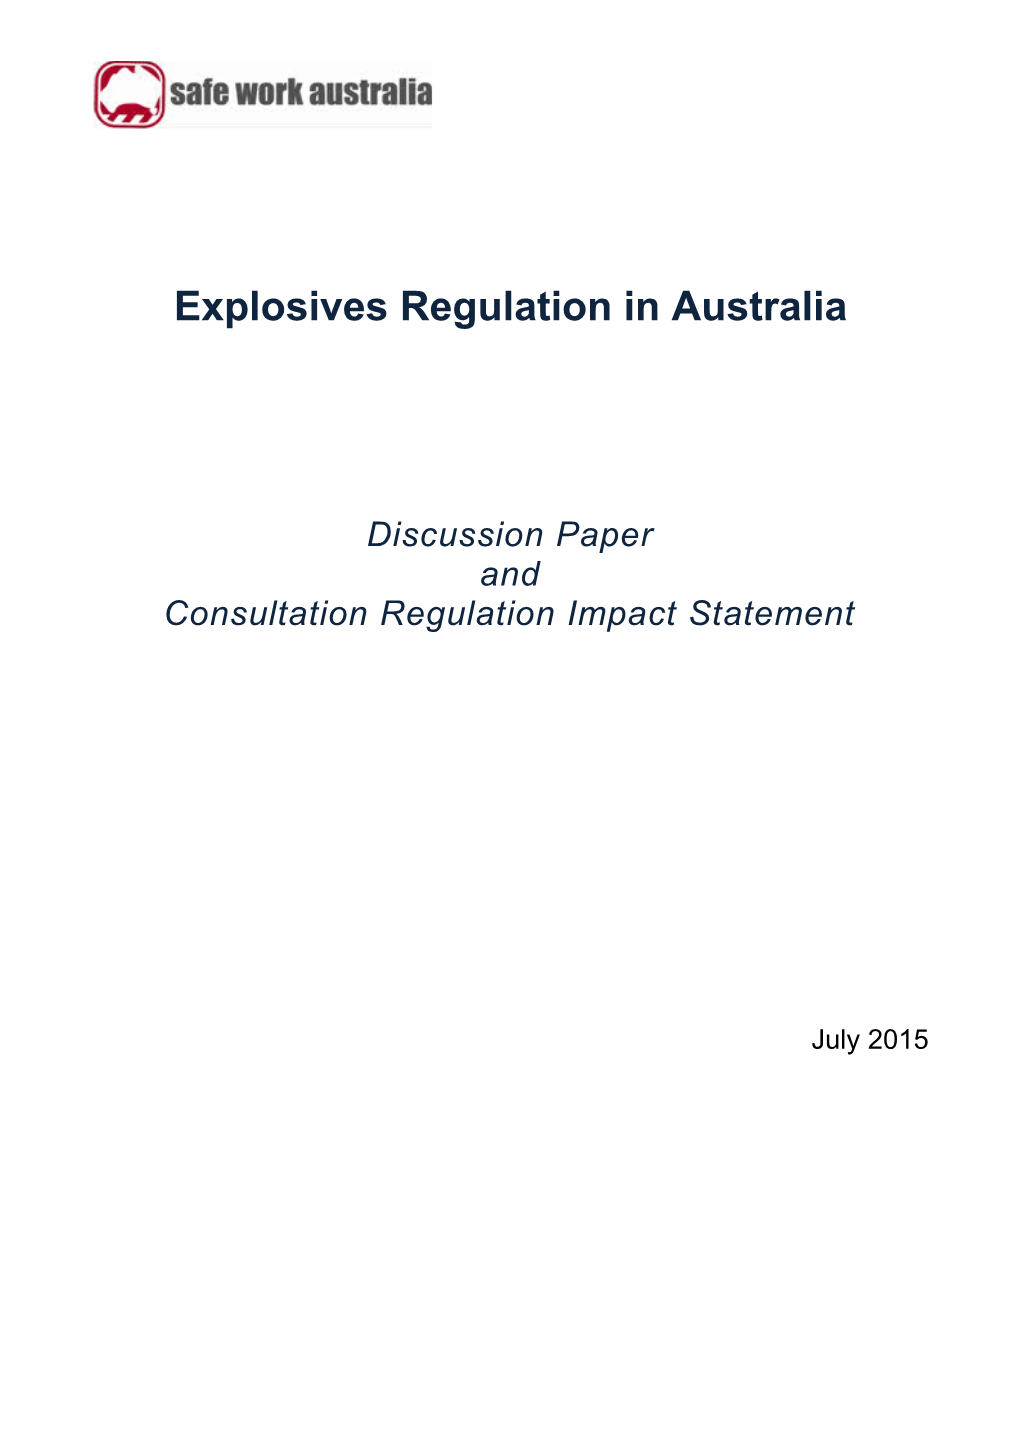 Explosives Regulation in Australia: Discussion Paper and Consultation Regulation Impact